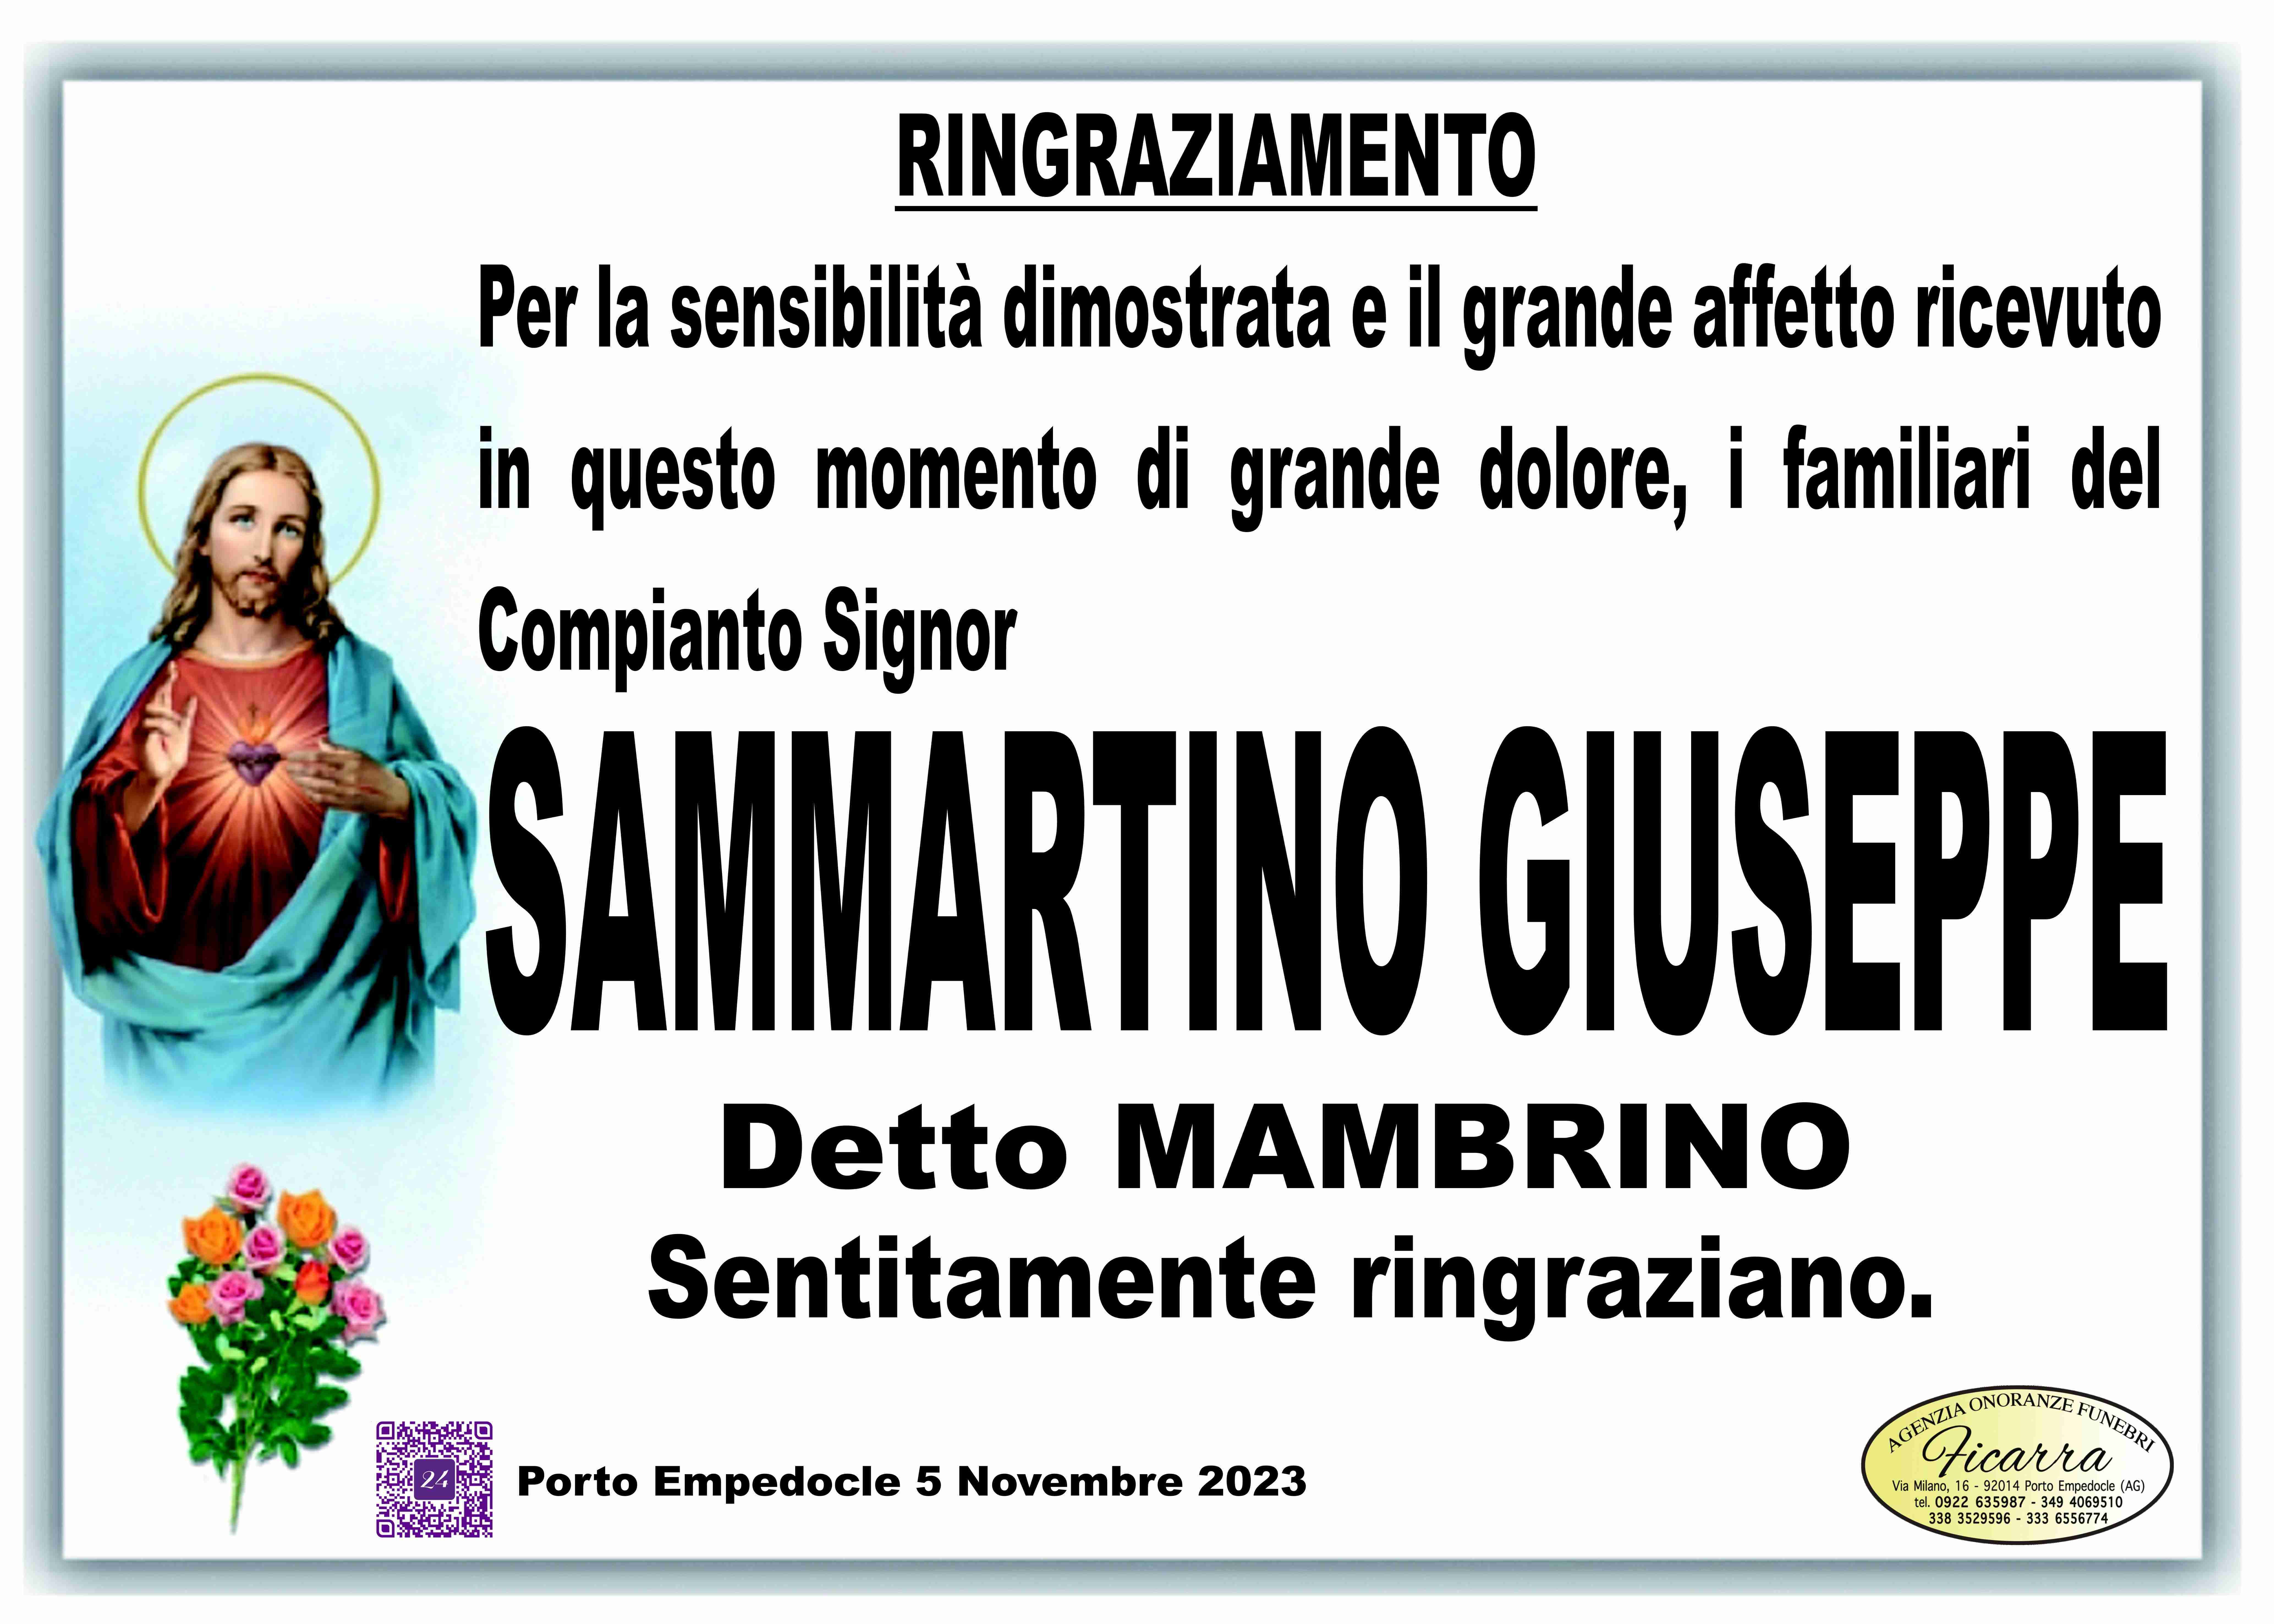 Giuseppe Sammartino